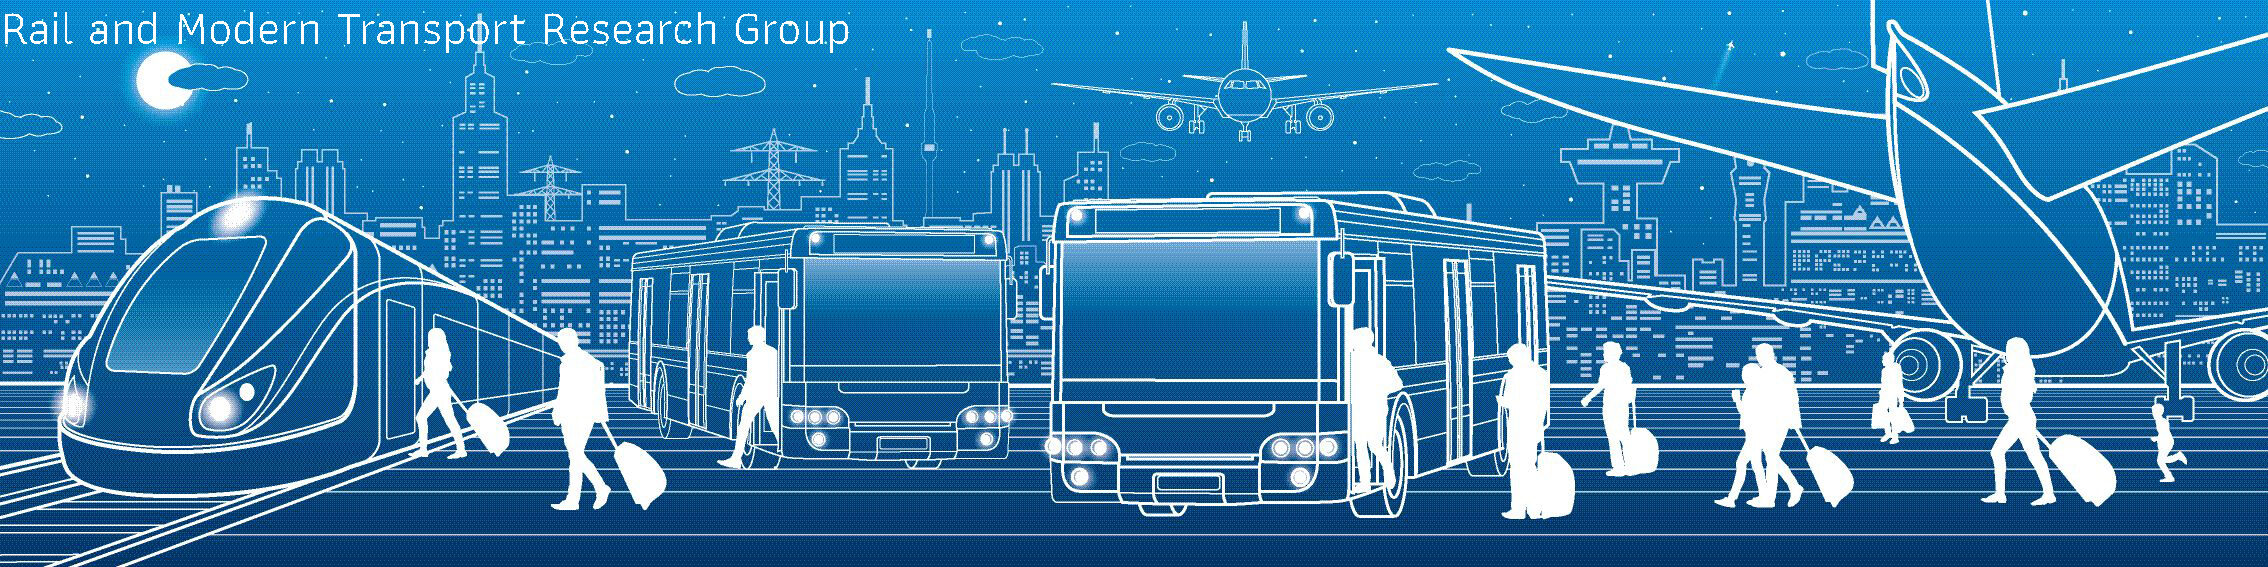 Rail and Modern Transports Research Group (RMT) : กลุ่มวิจัยเทคโนโลยีระบบรางและการขนส่งสมัยใหม่ สวทช.